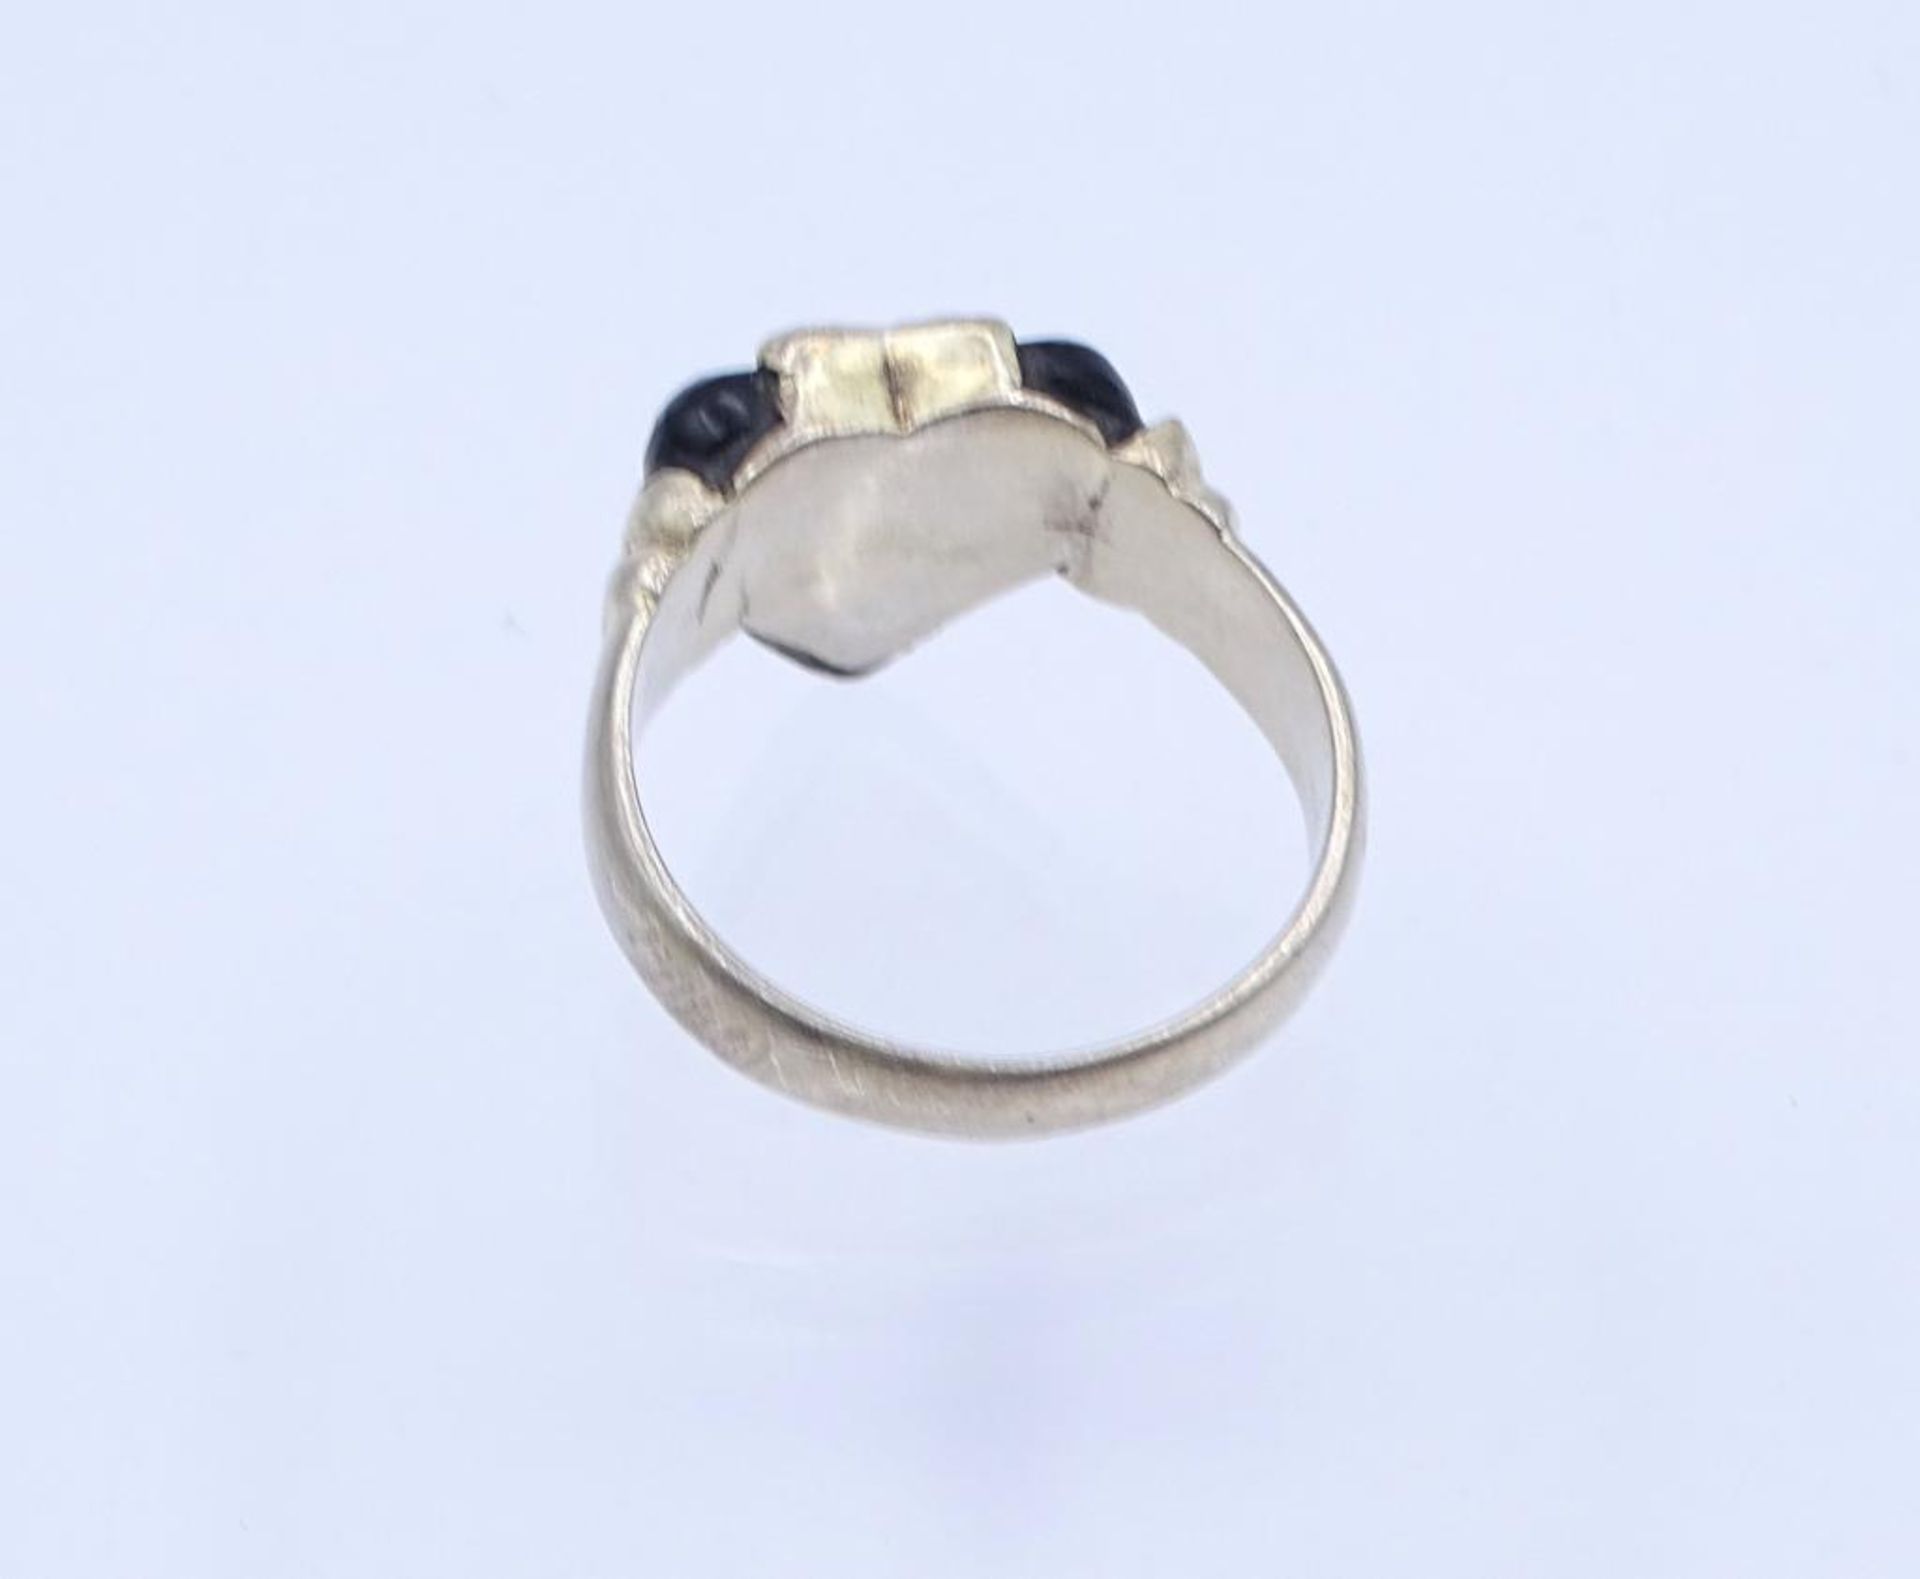 Onyx-Silber-Ring,Silber 925/000, 4,9gr., RG 57- - -22.61 % buyer's premium on the hammer priceVAT - Bild 3 aus 3